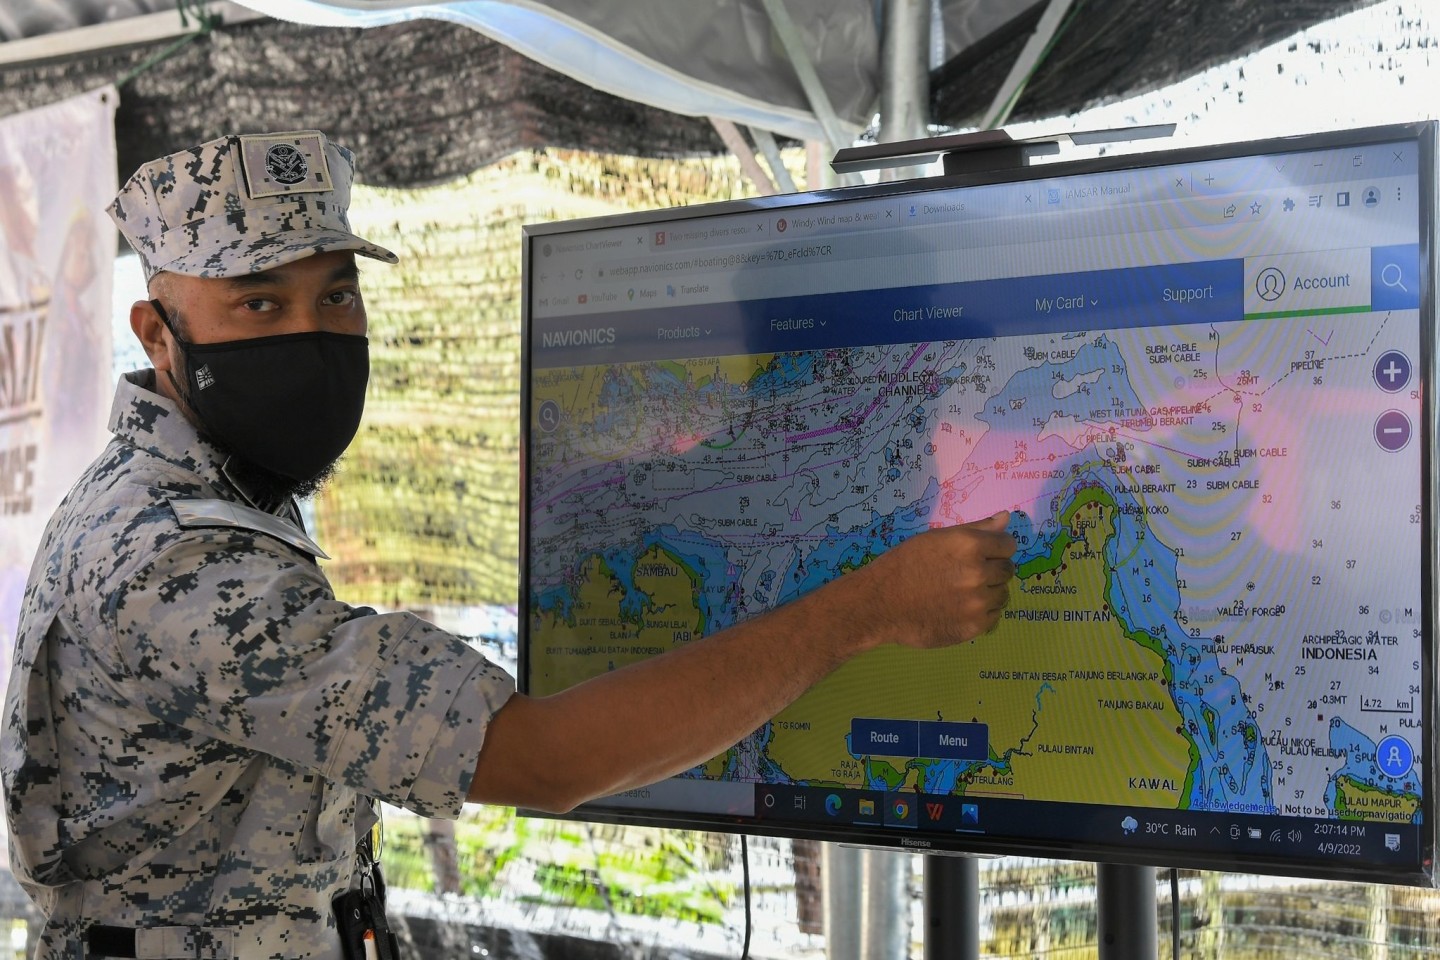 Maritime Commander Khairul Nizam Misran zeigt den Fundort der vermissten Taucher.